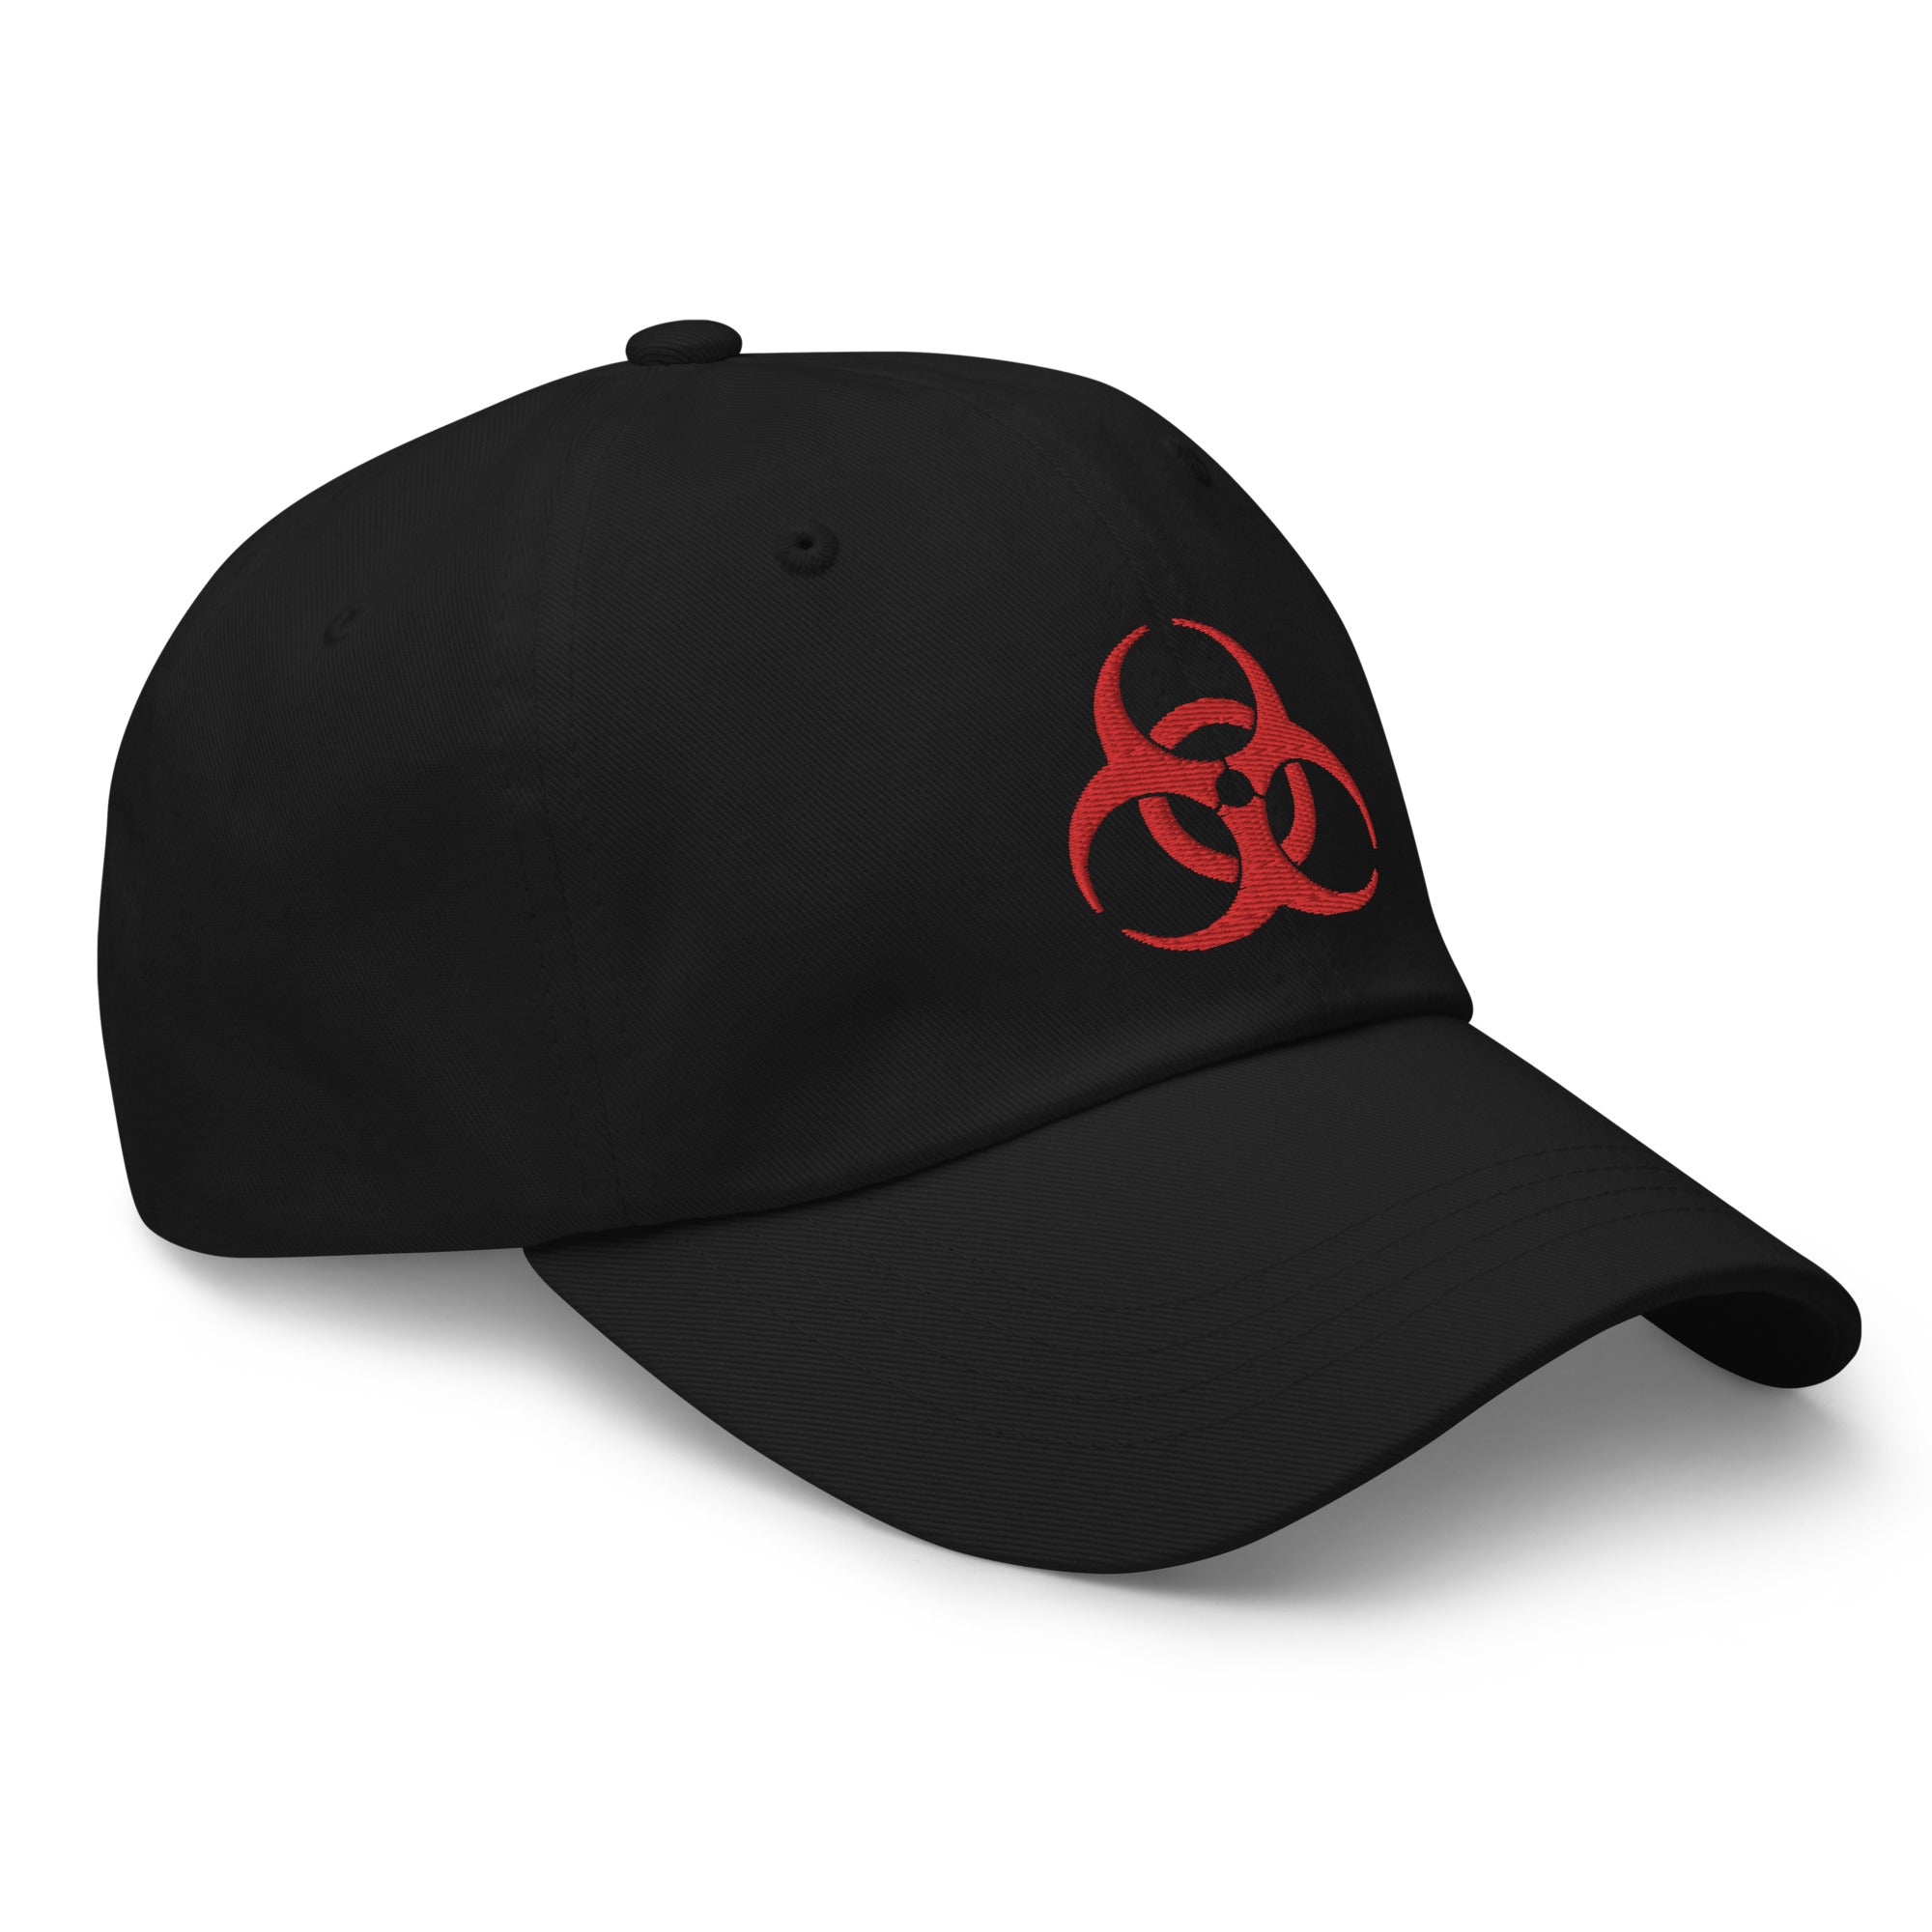 Red Thread Bio Hazard Symbol Warning Sign Embroidered Baseball Cap Dad hat Zombies - Edge of Life Designs